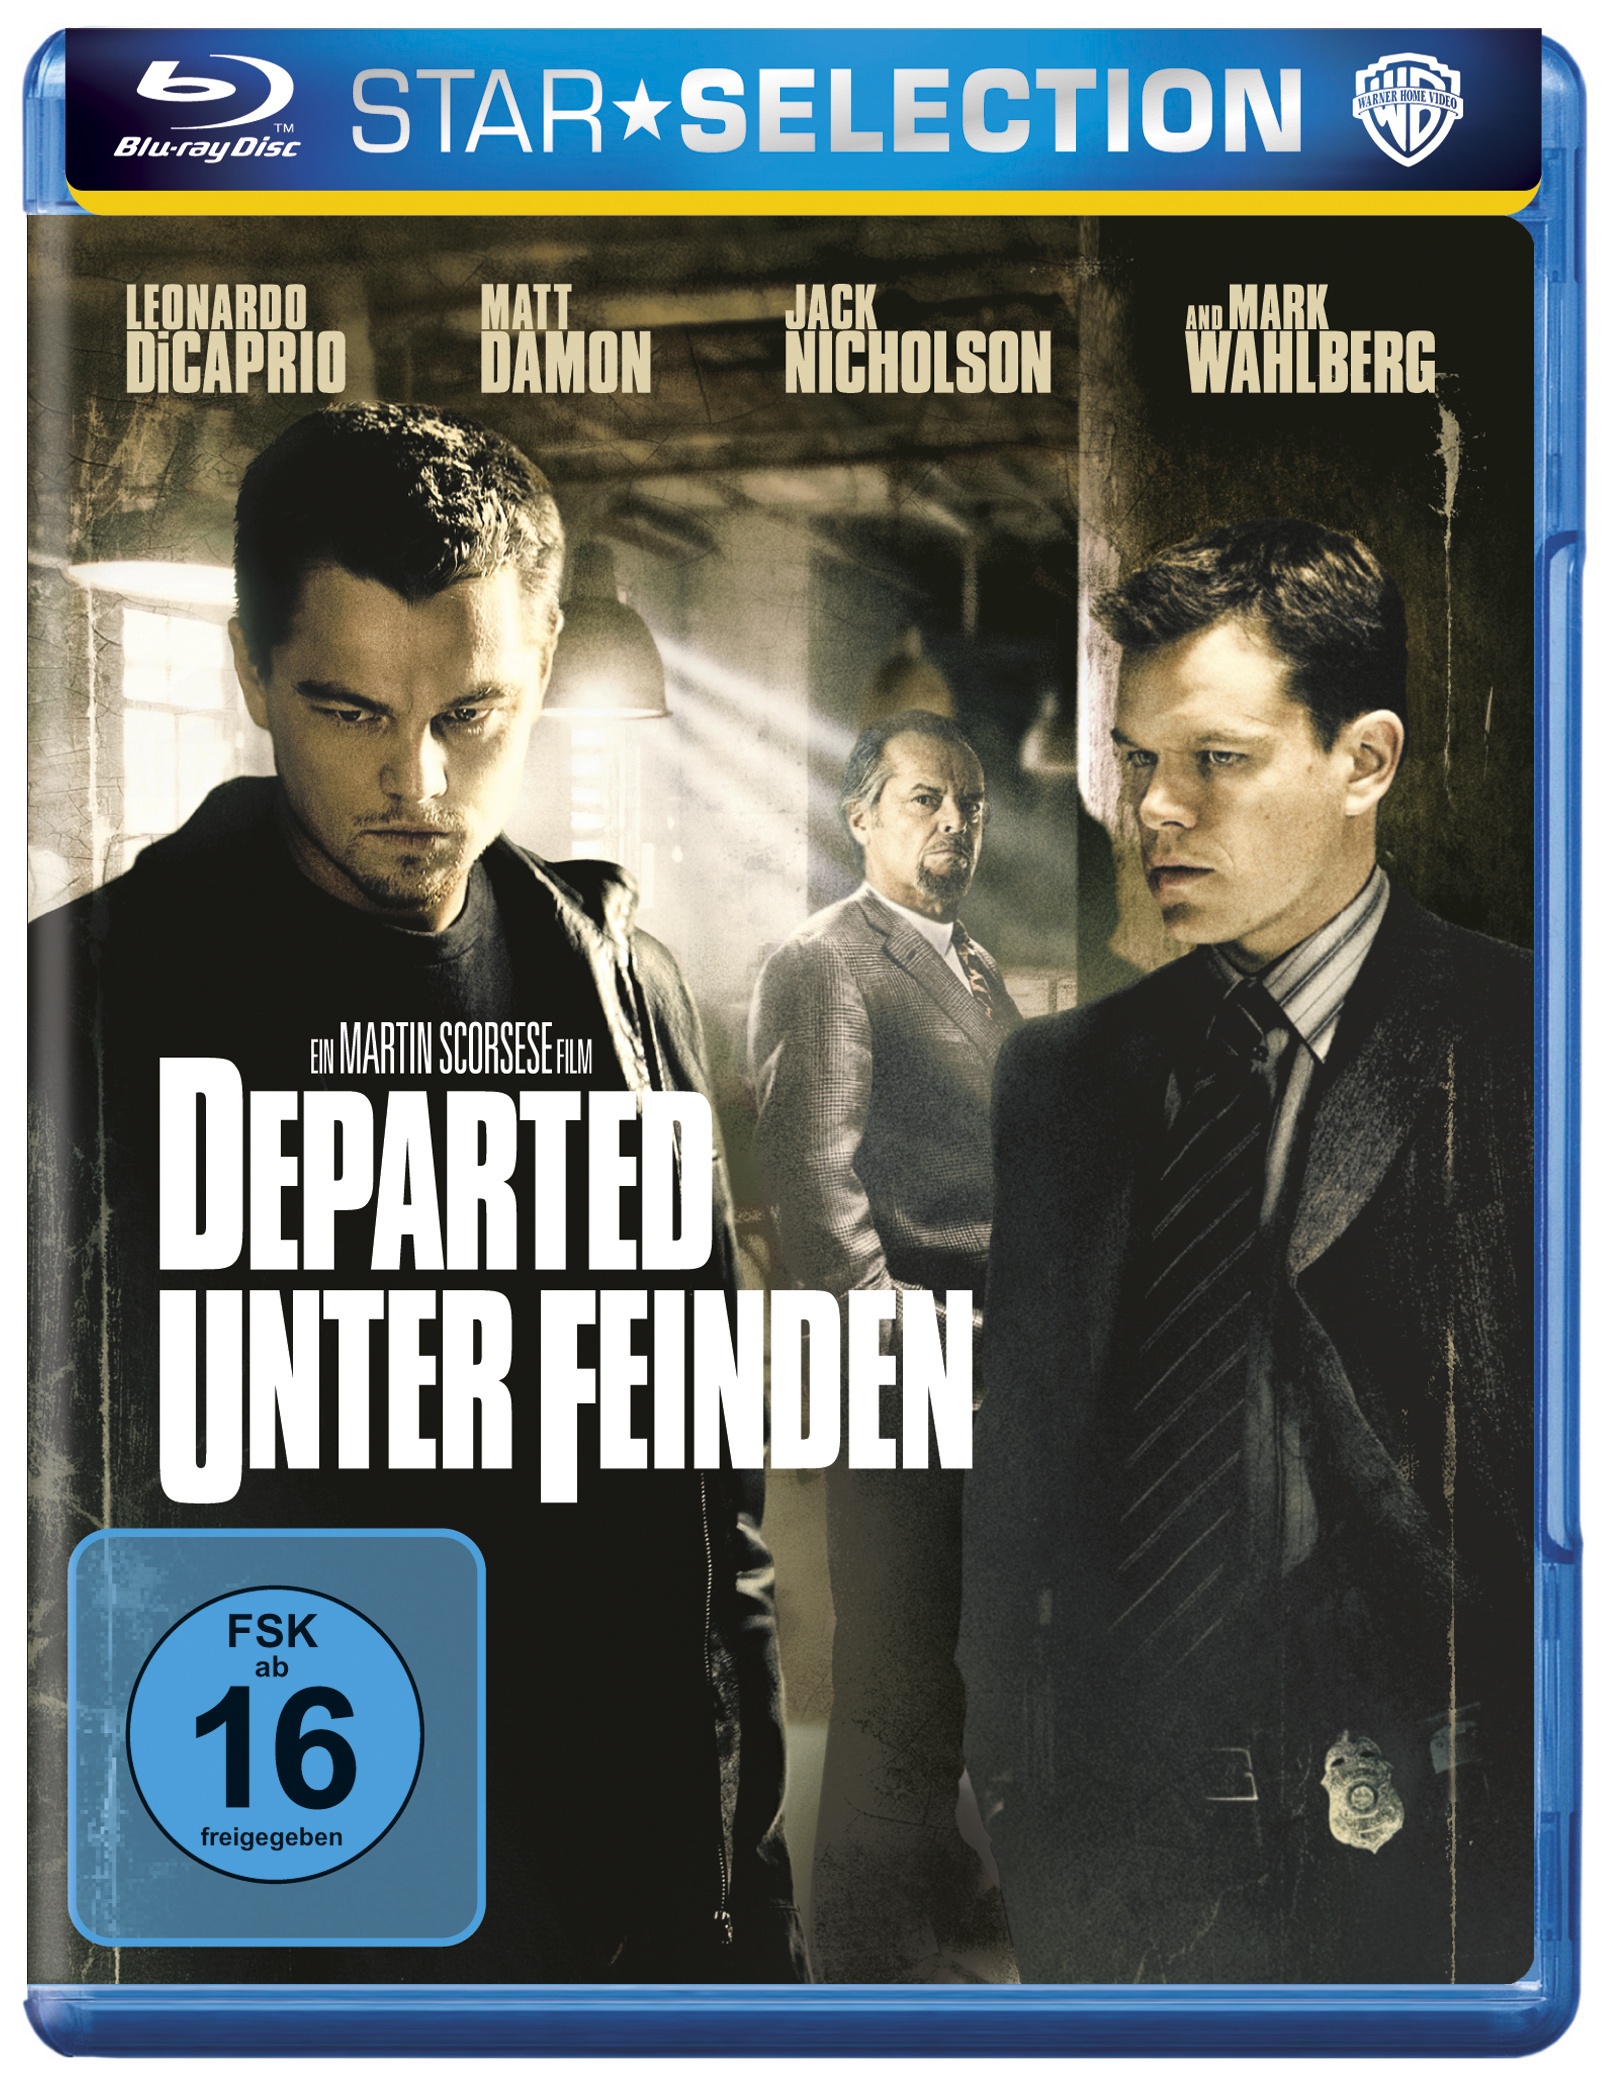 Departed - Unter Feinden (Blu-ray)